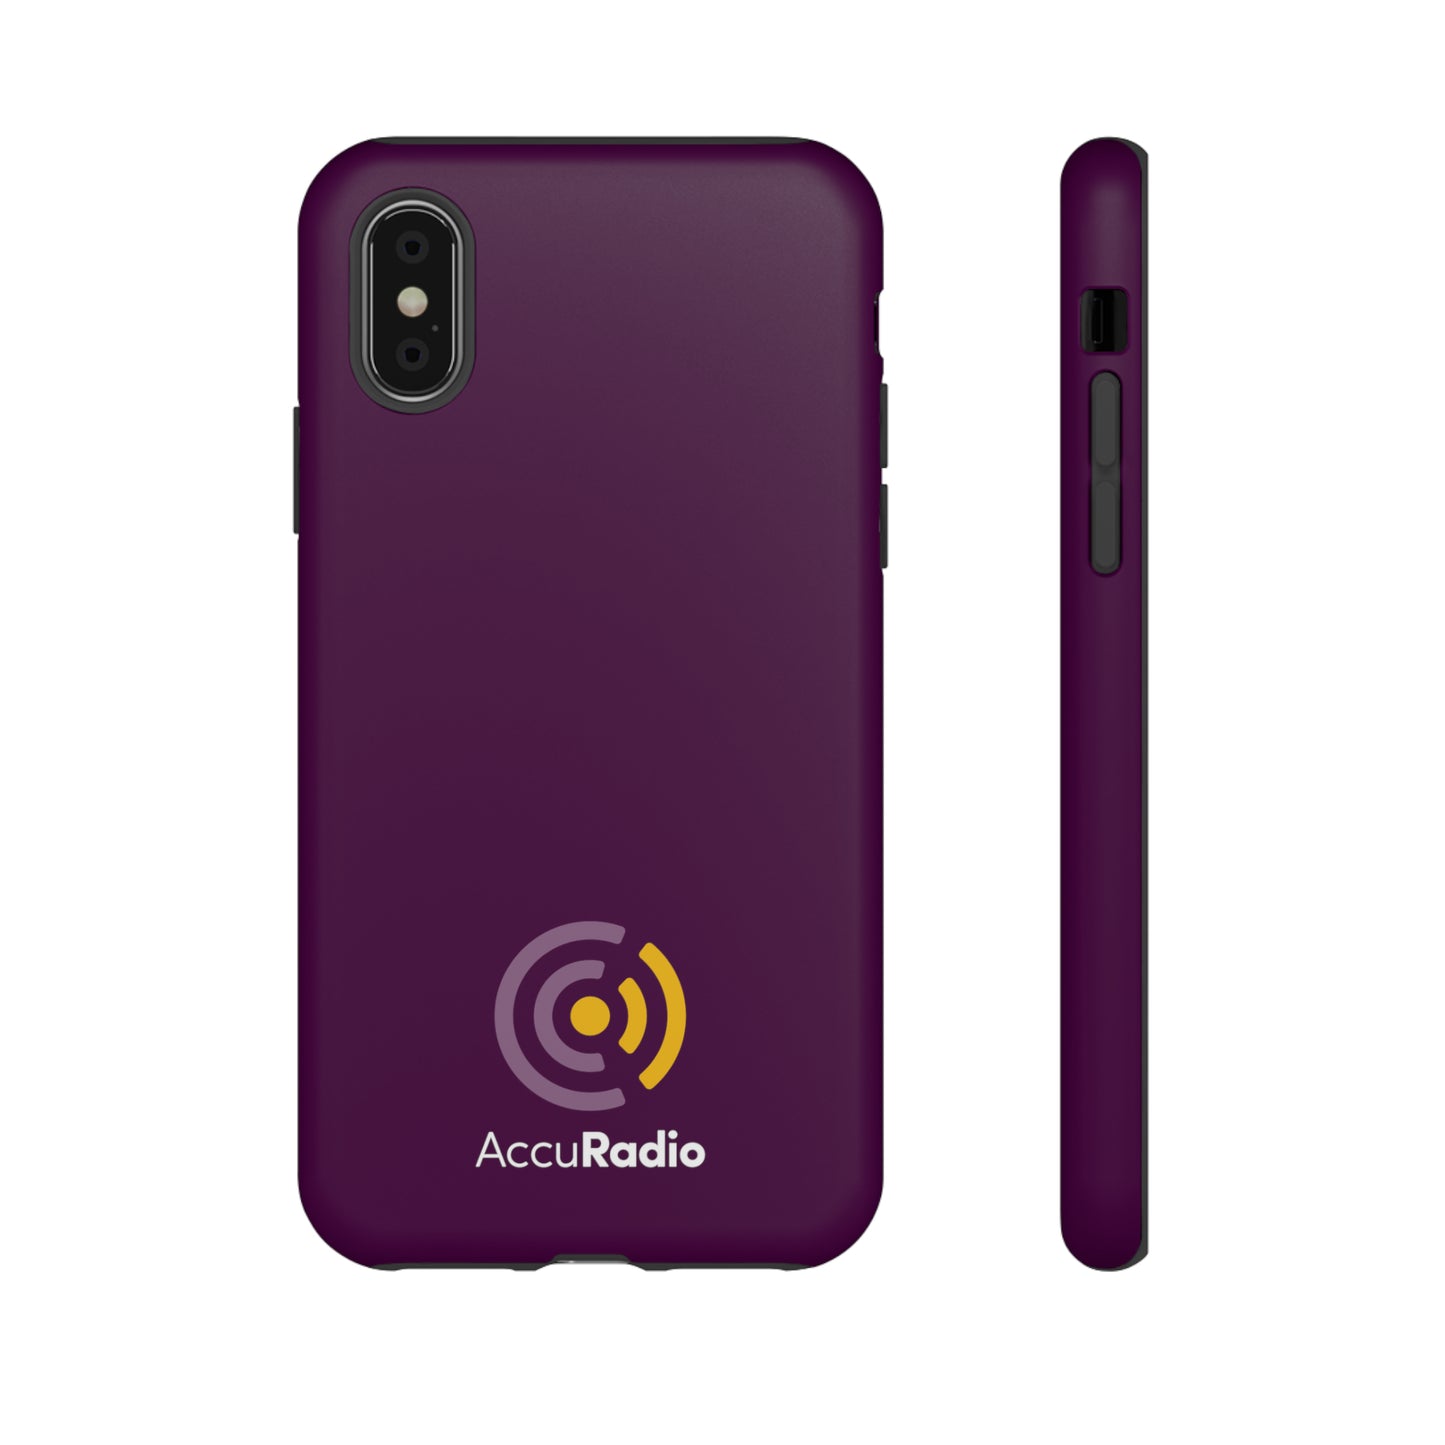 AccuRadio classic protective phone case